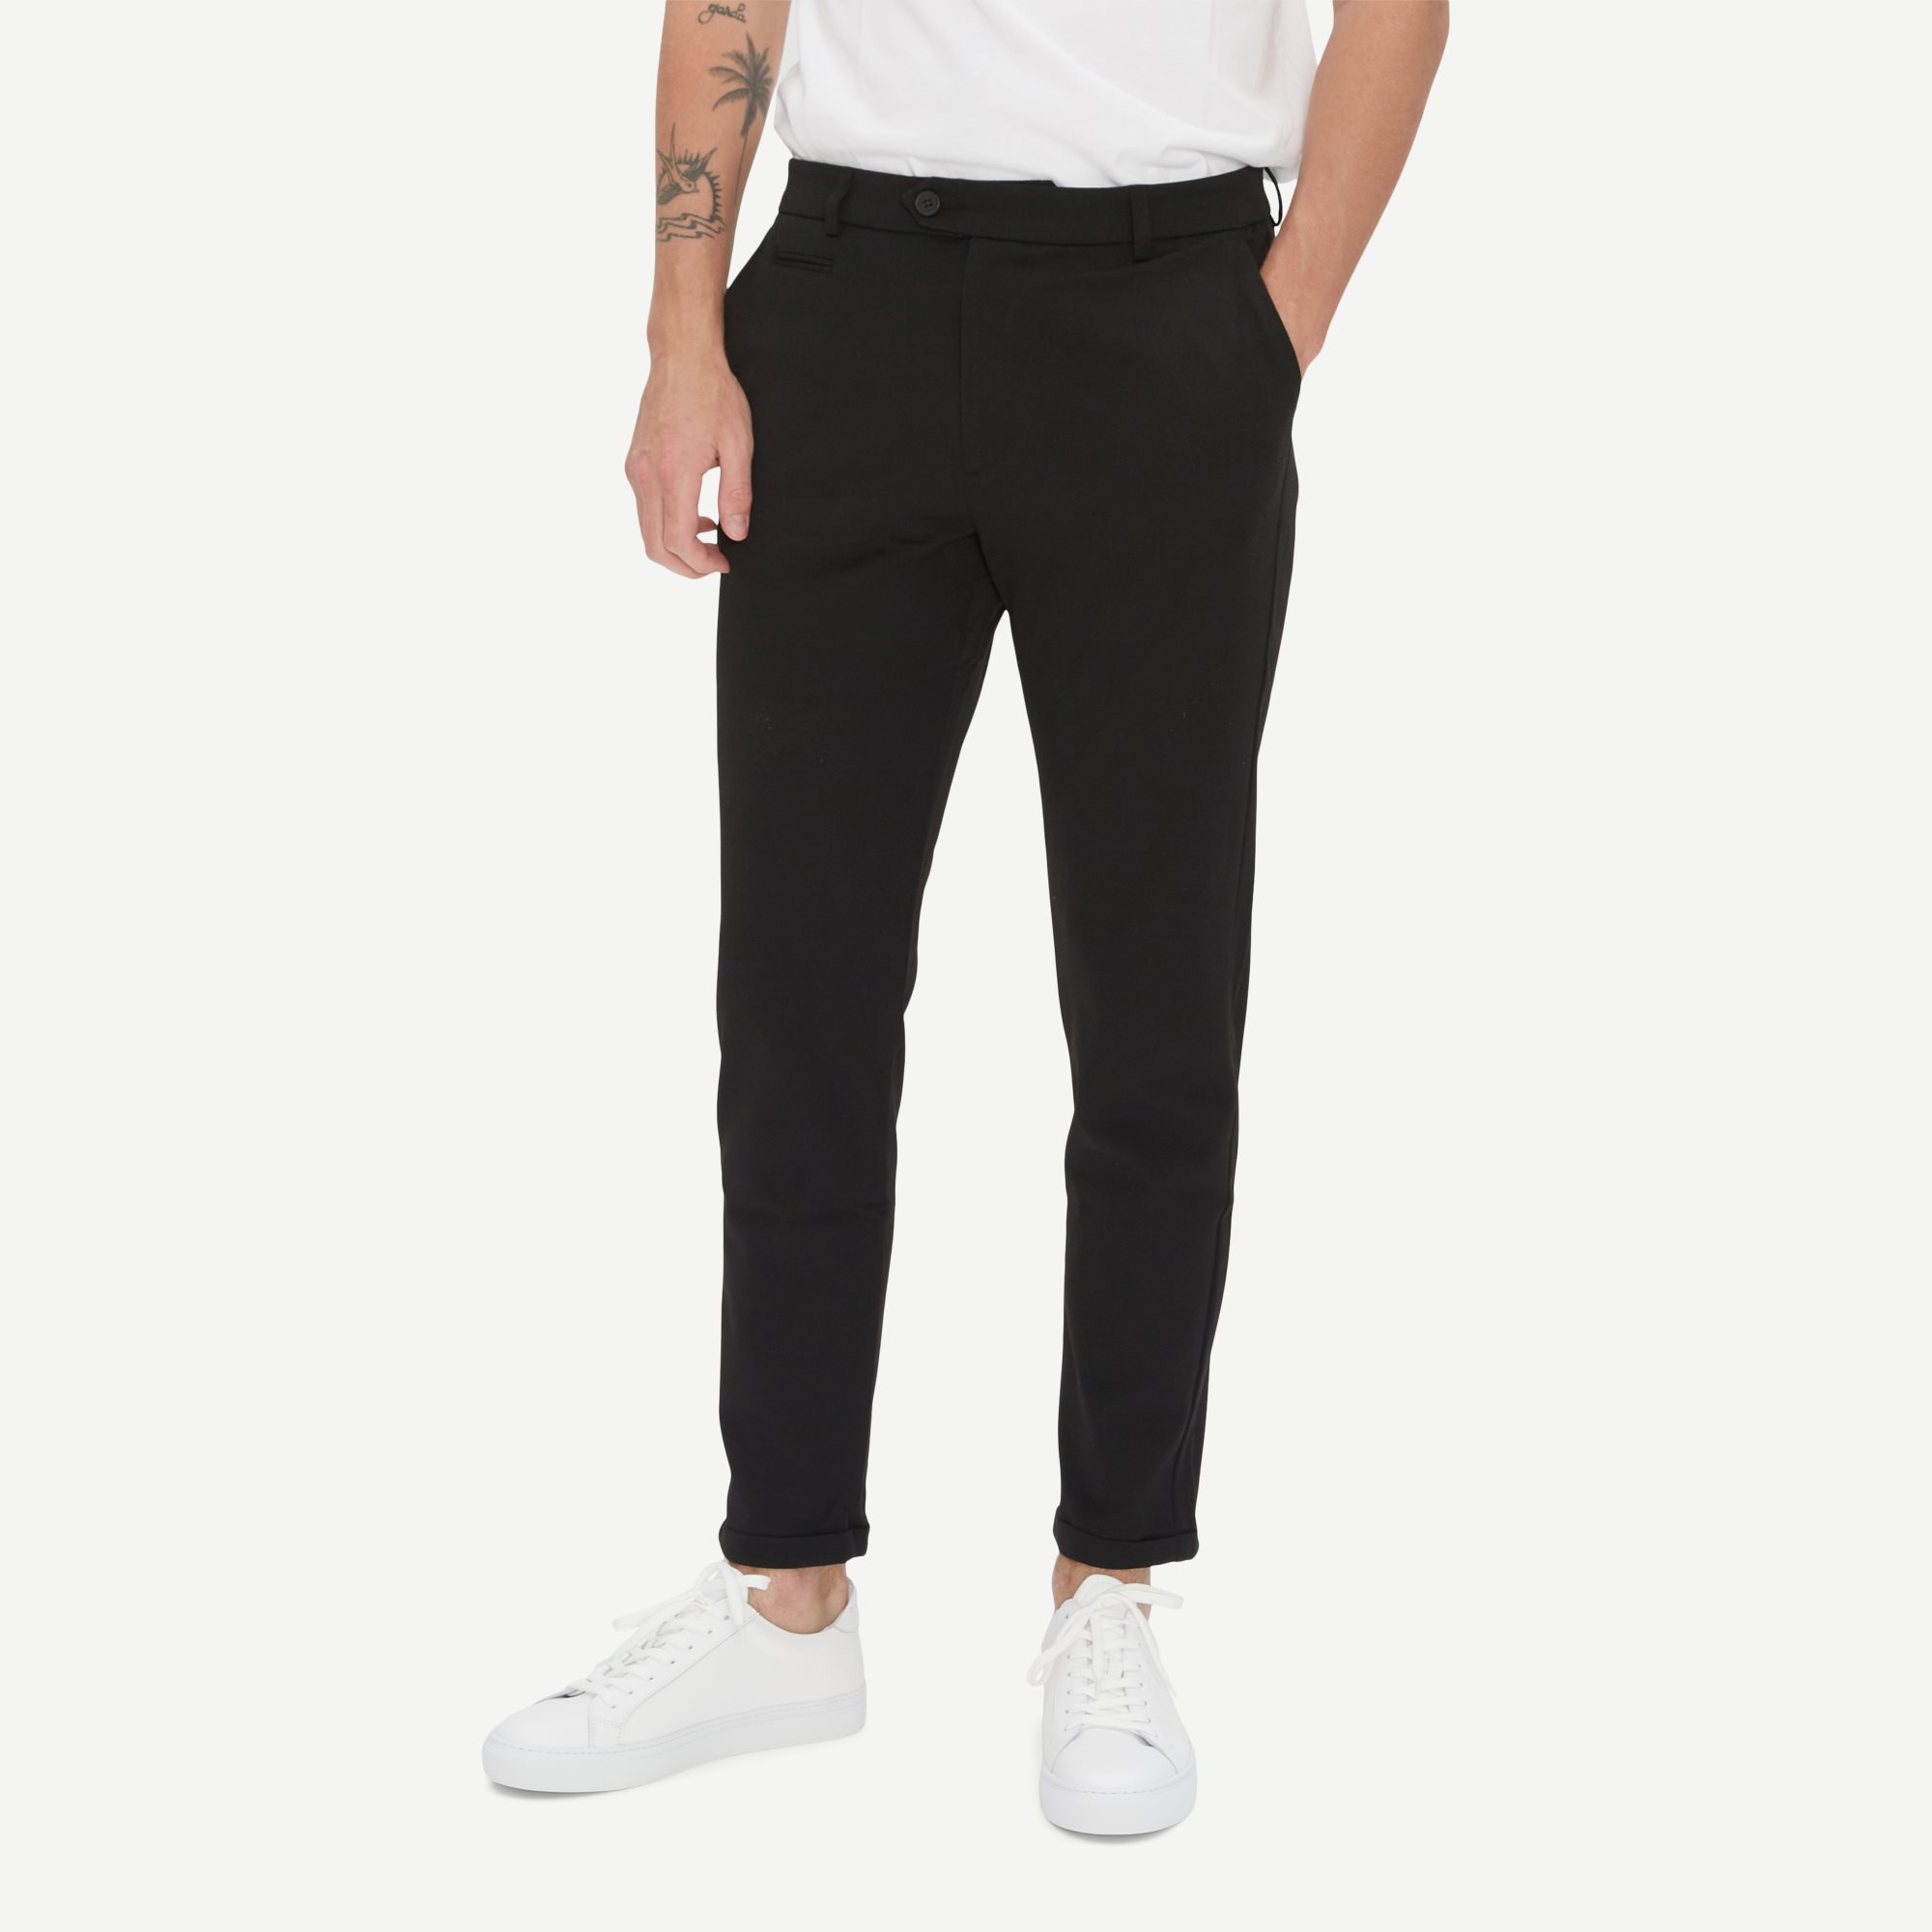 Como Suit Pants - Bukser - Slim fit - Sort